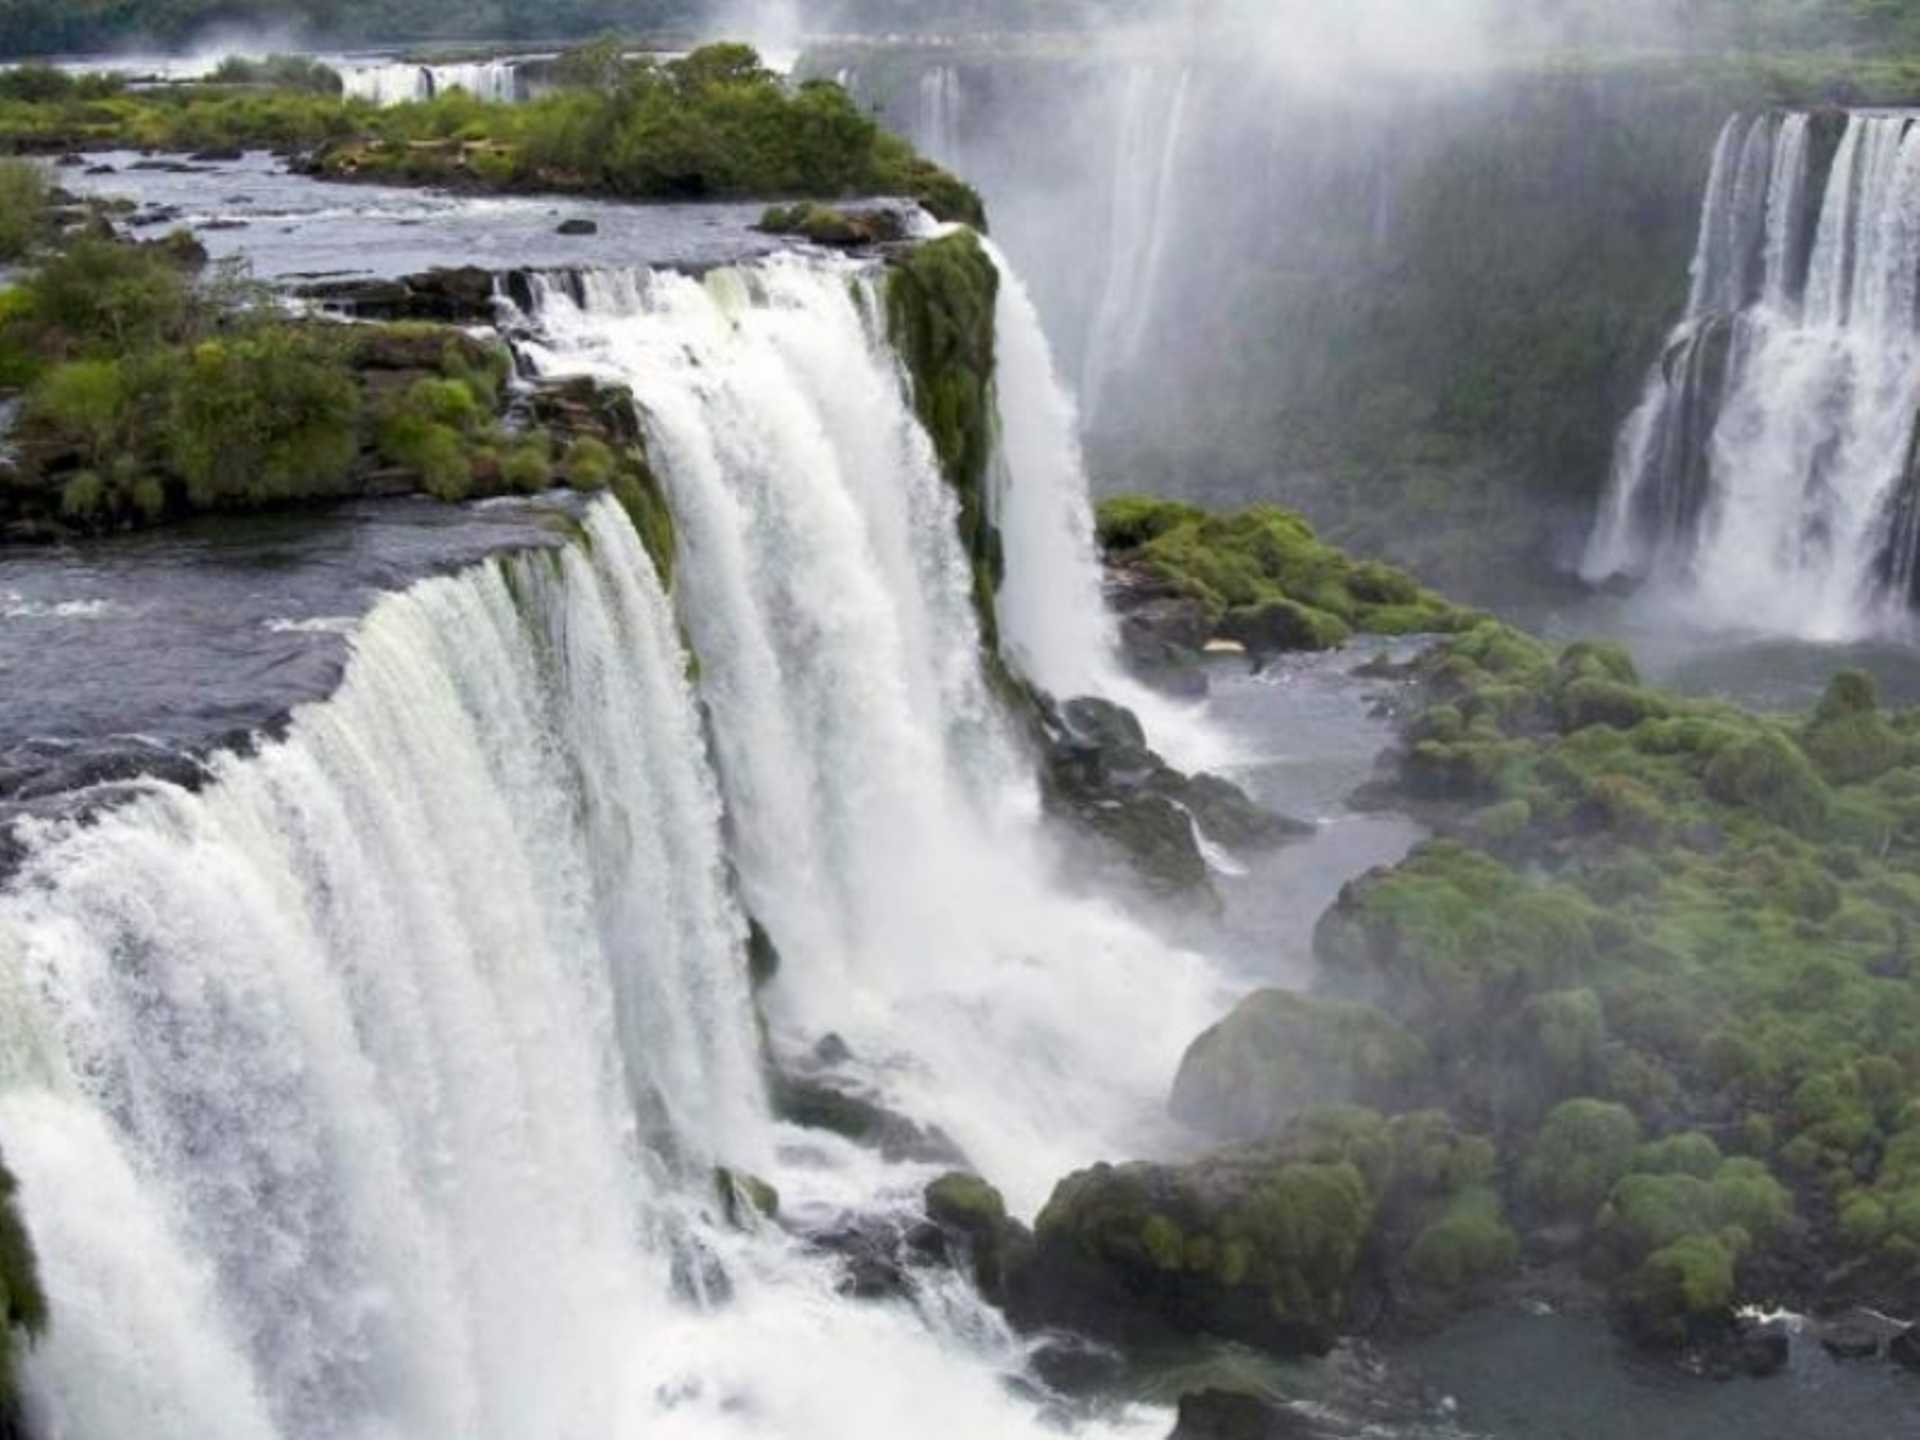 Iguazu Falls 2 Days Private Tour Both Sides